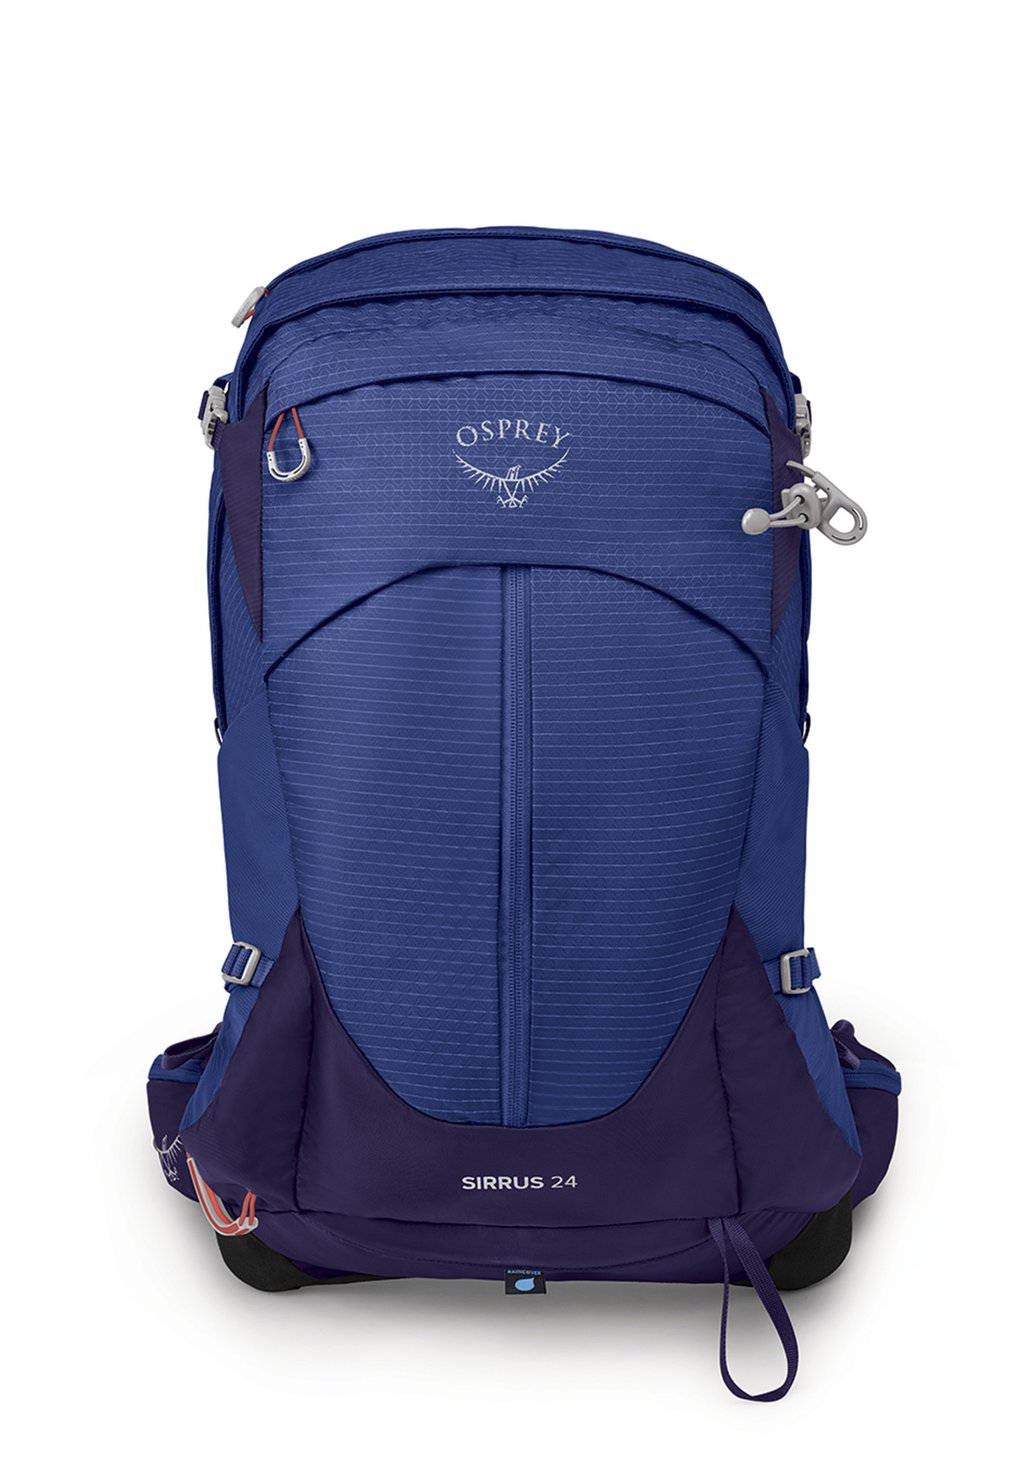 Туристический рюкзак SIRRUS Osprey, цвет blueberry туристический рюкзак sirrus osprey цвет tunnel vision grey